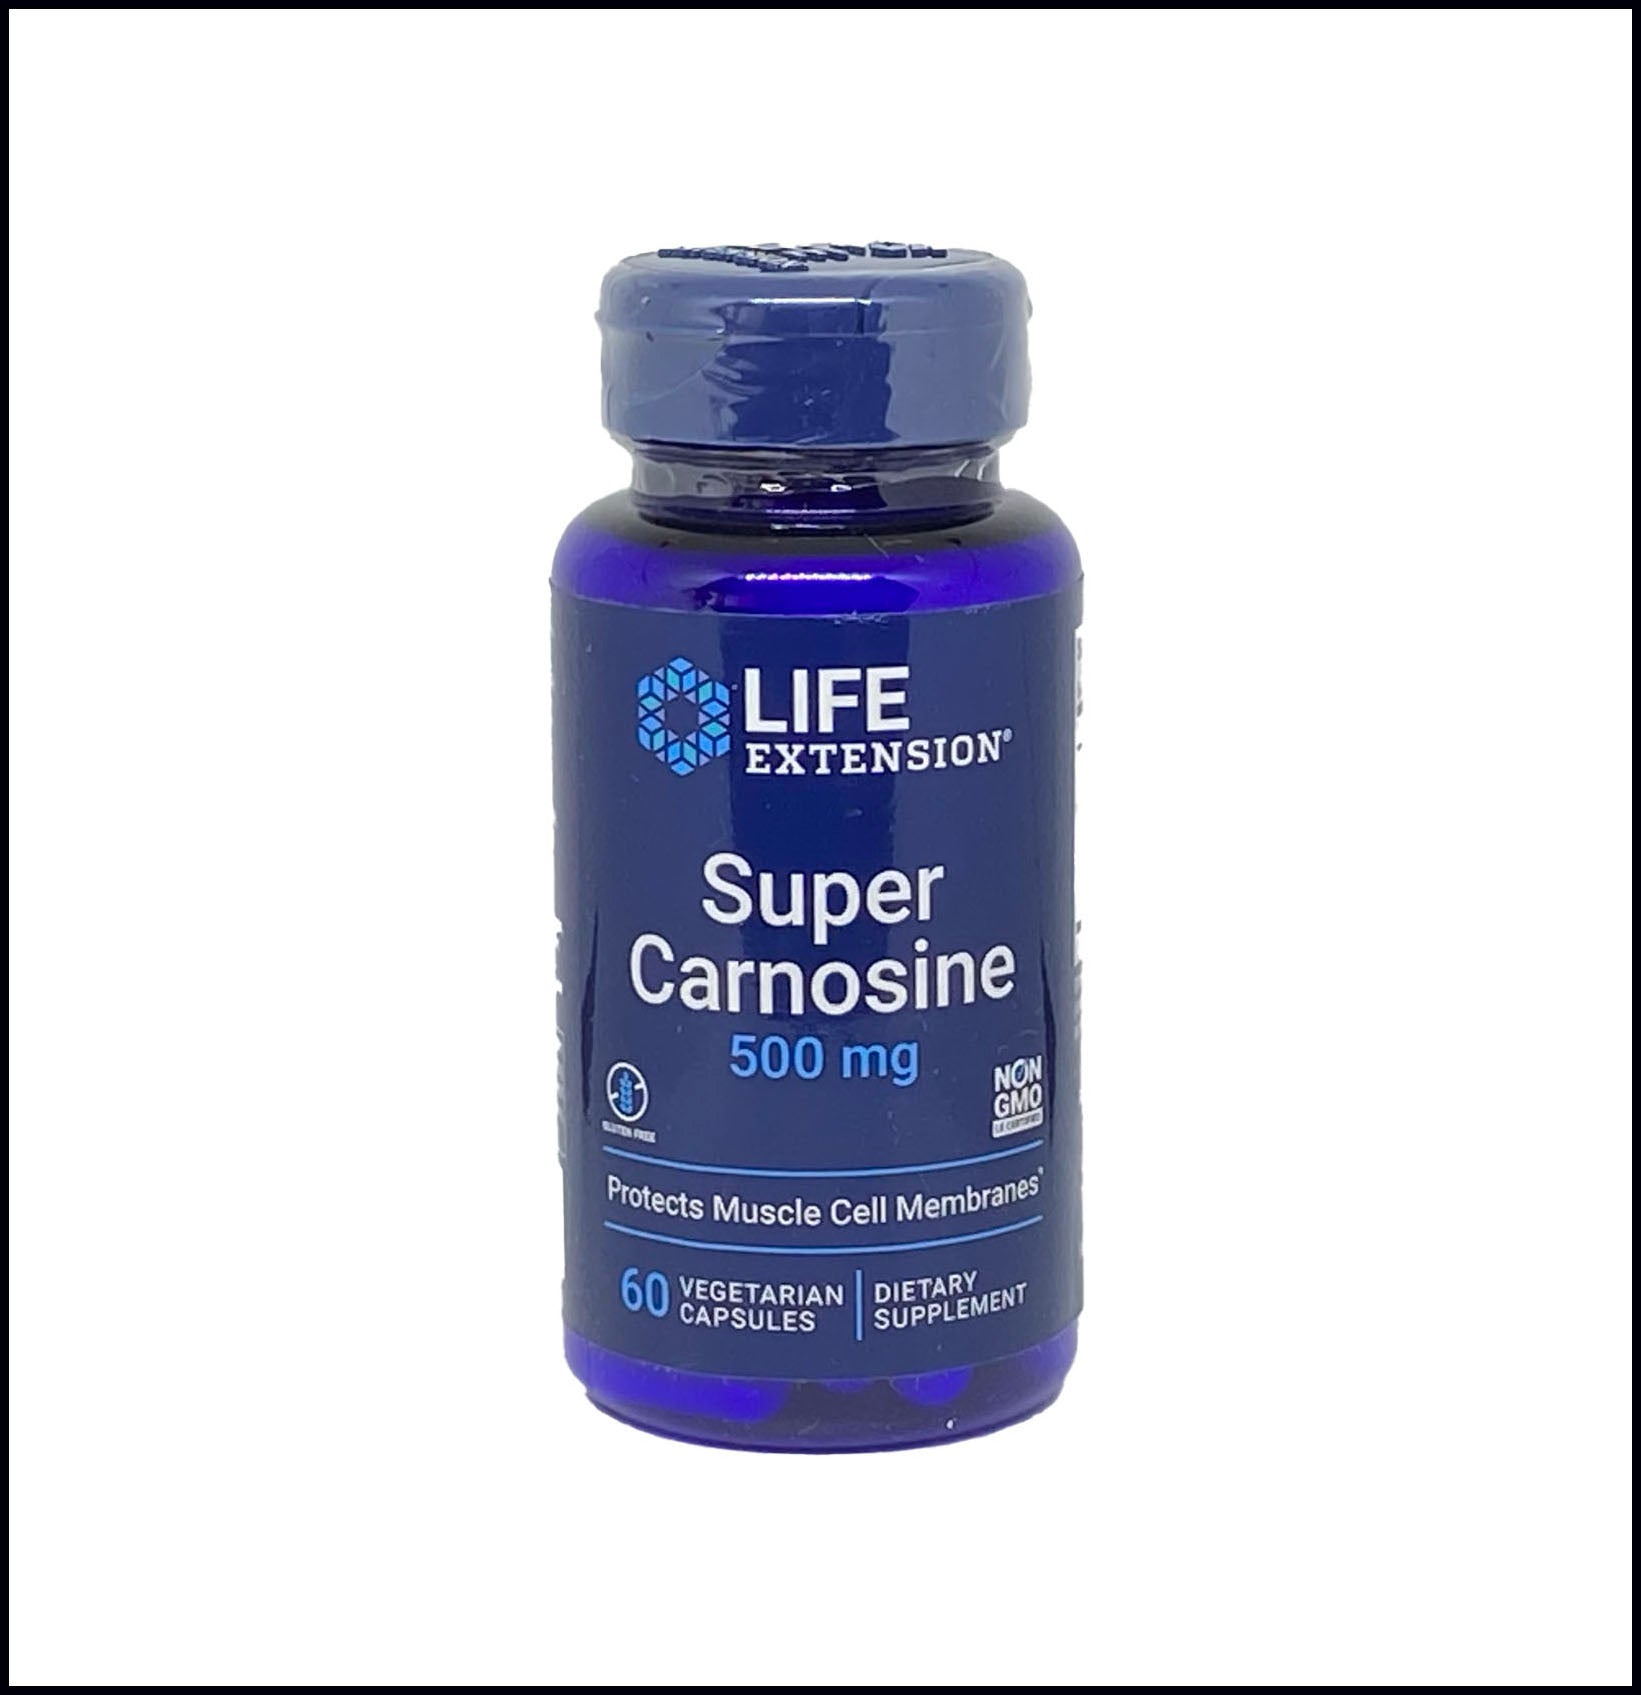 Super Carnosine, 500 mg, #60